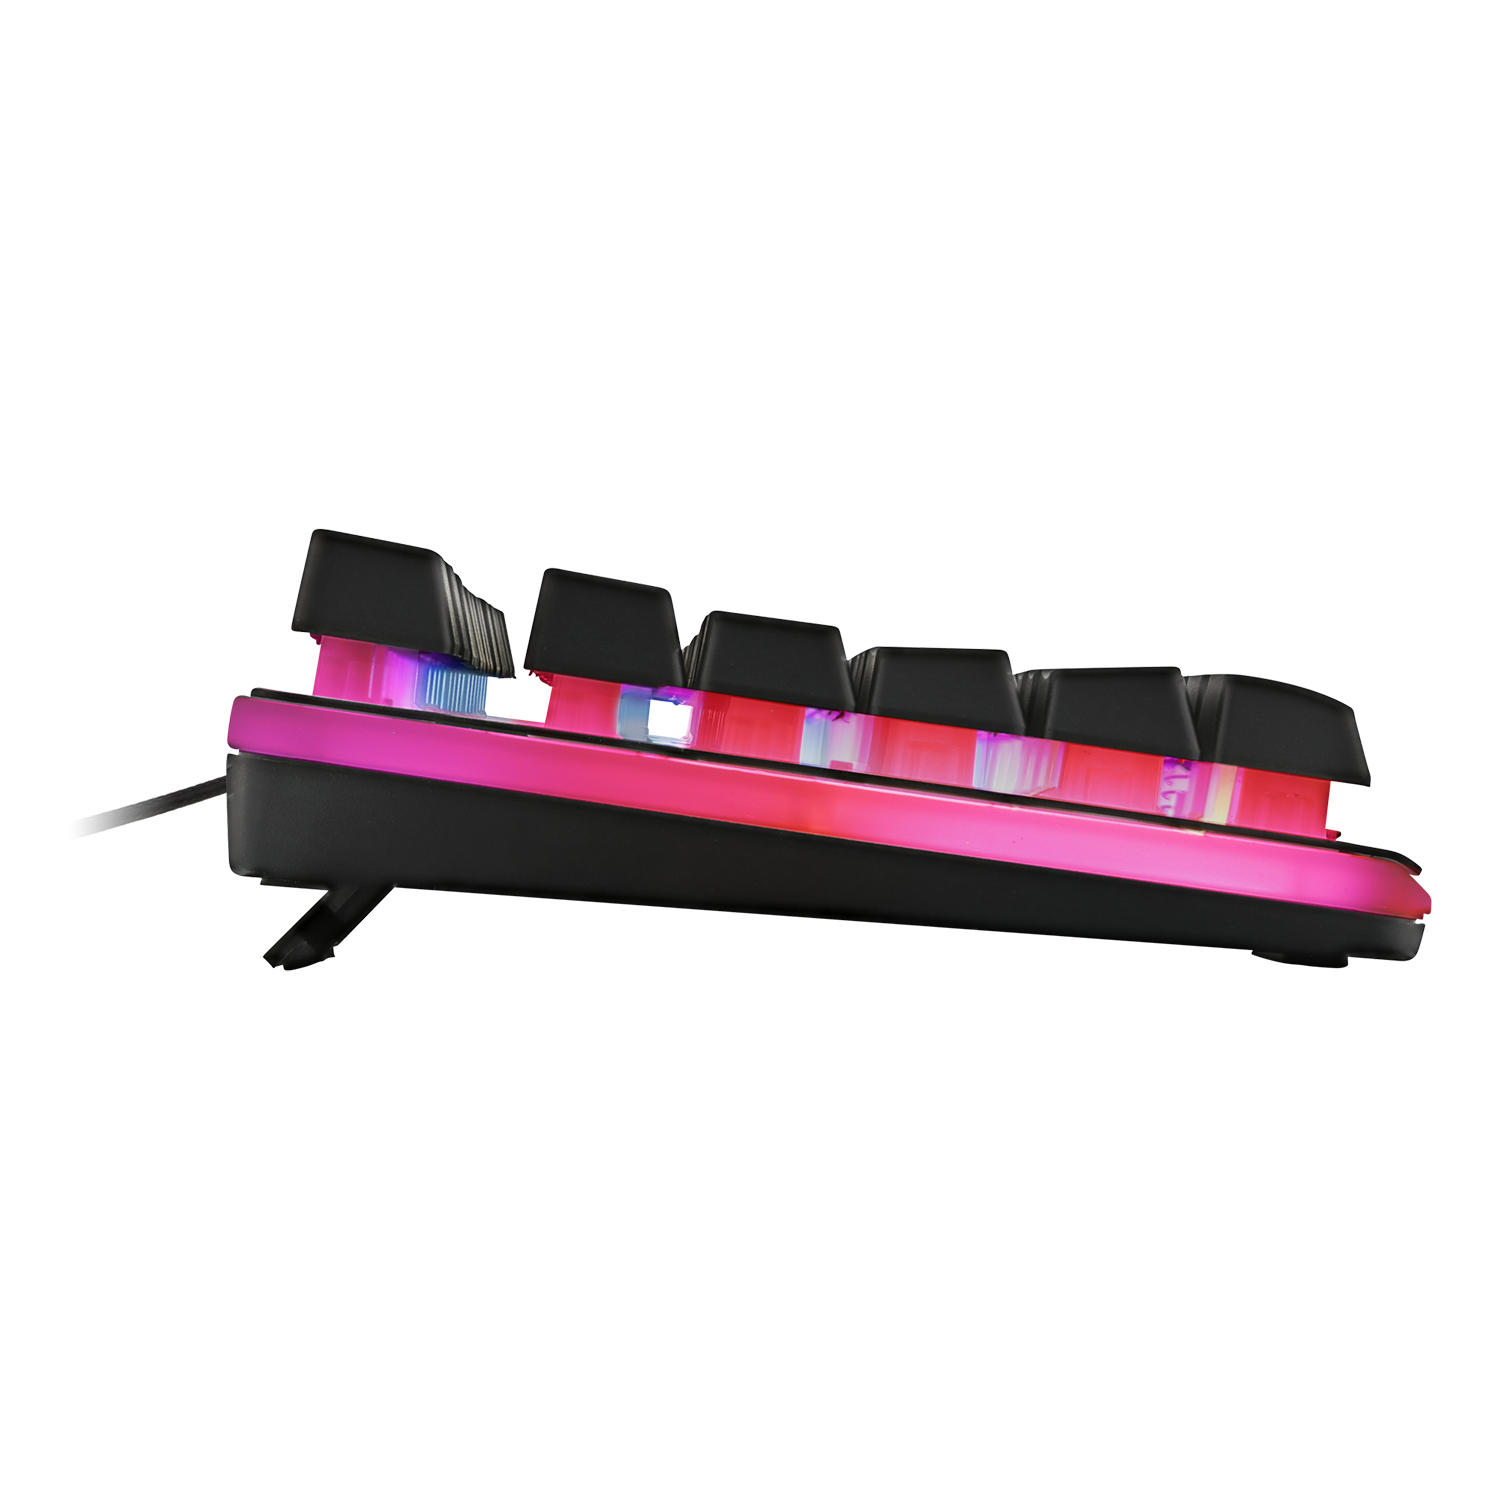 Deltaco Gaming tangentbord, membranbrytare, RGB belysning